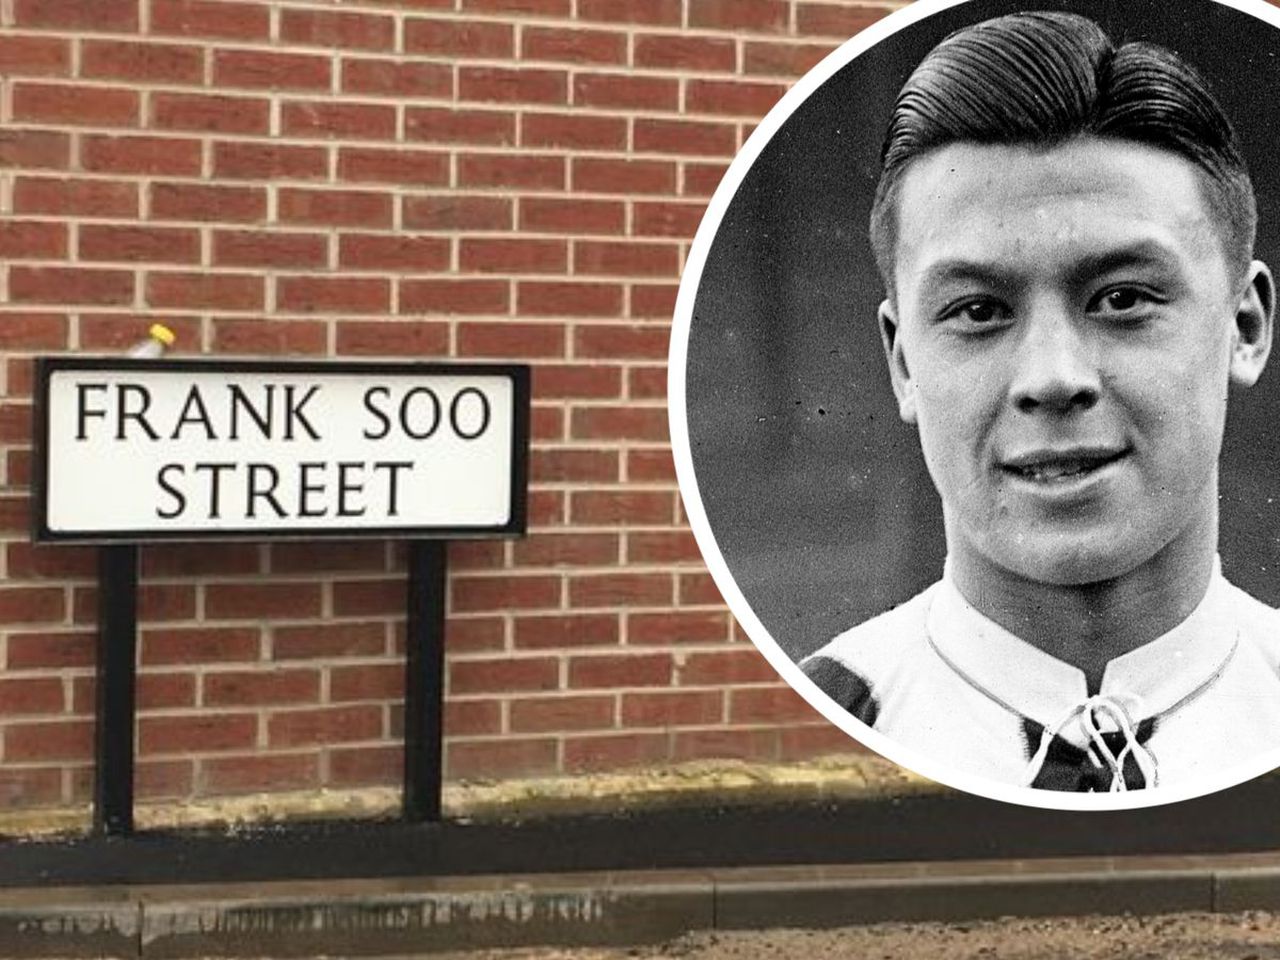 Google celebrated English Footballer Frank Soo